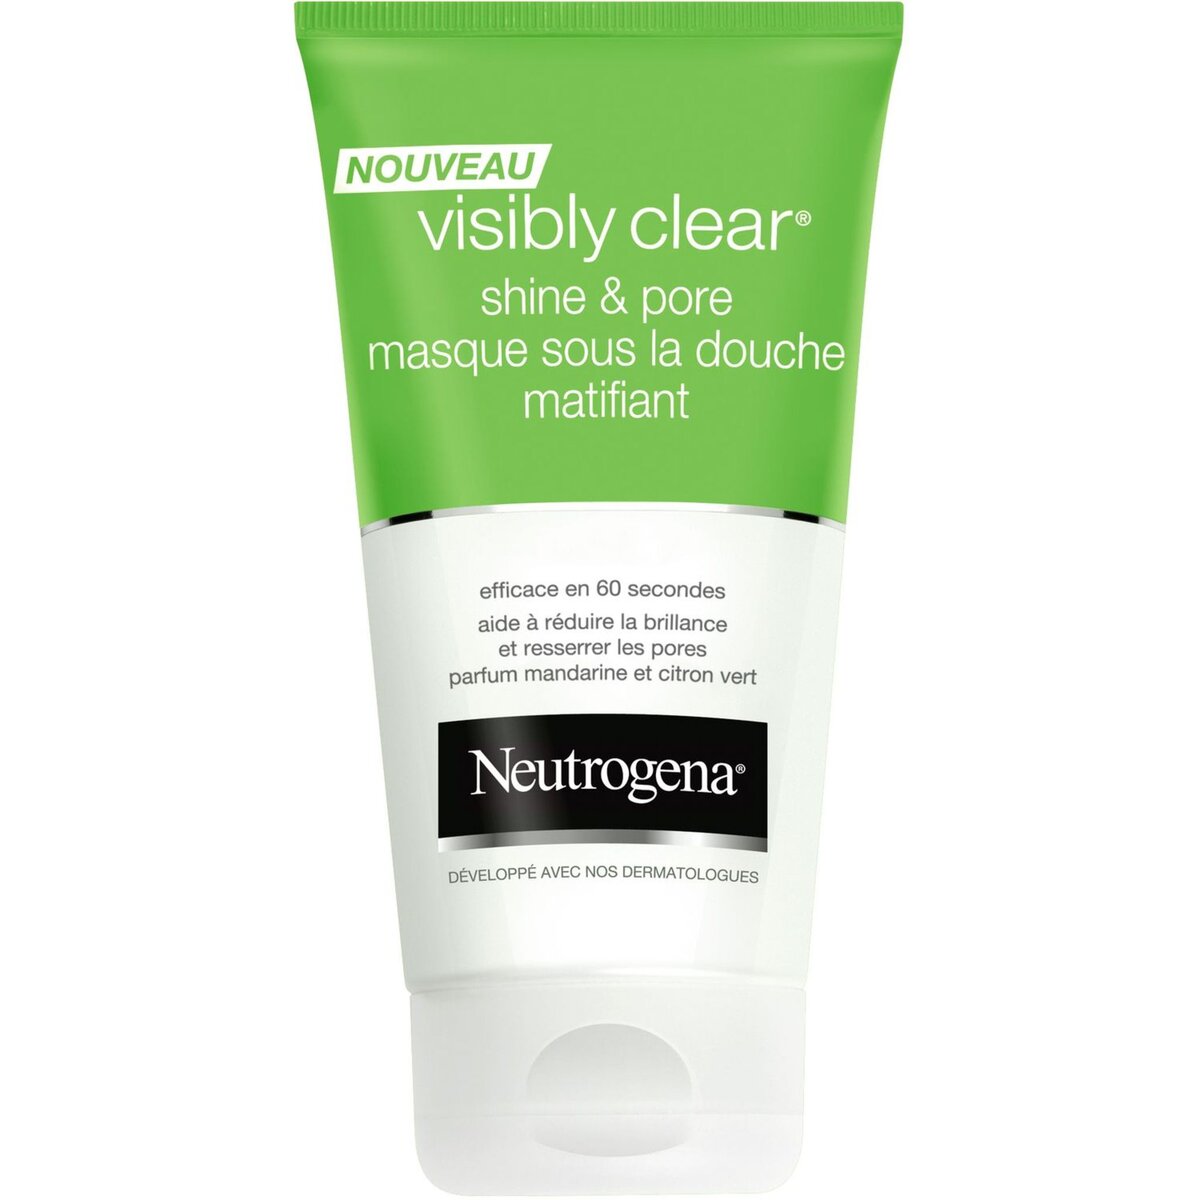 NEUTROGENA Neutrogena Visibly Clear masque sous la douche matifiant 150ml 150ml